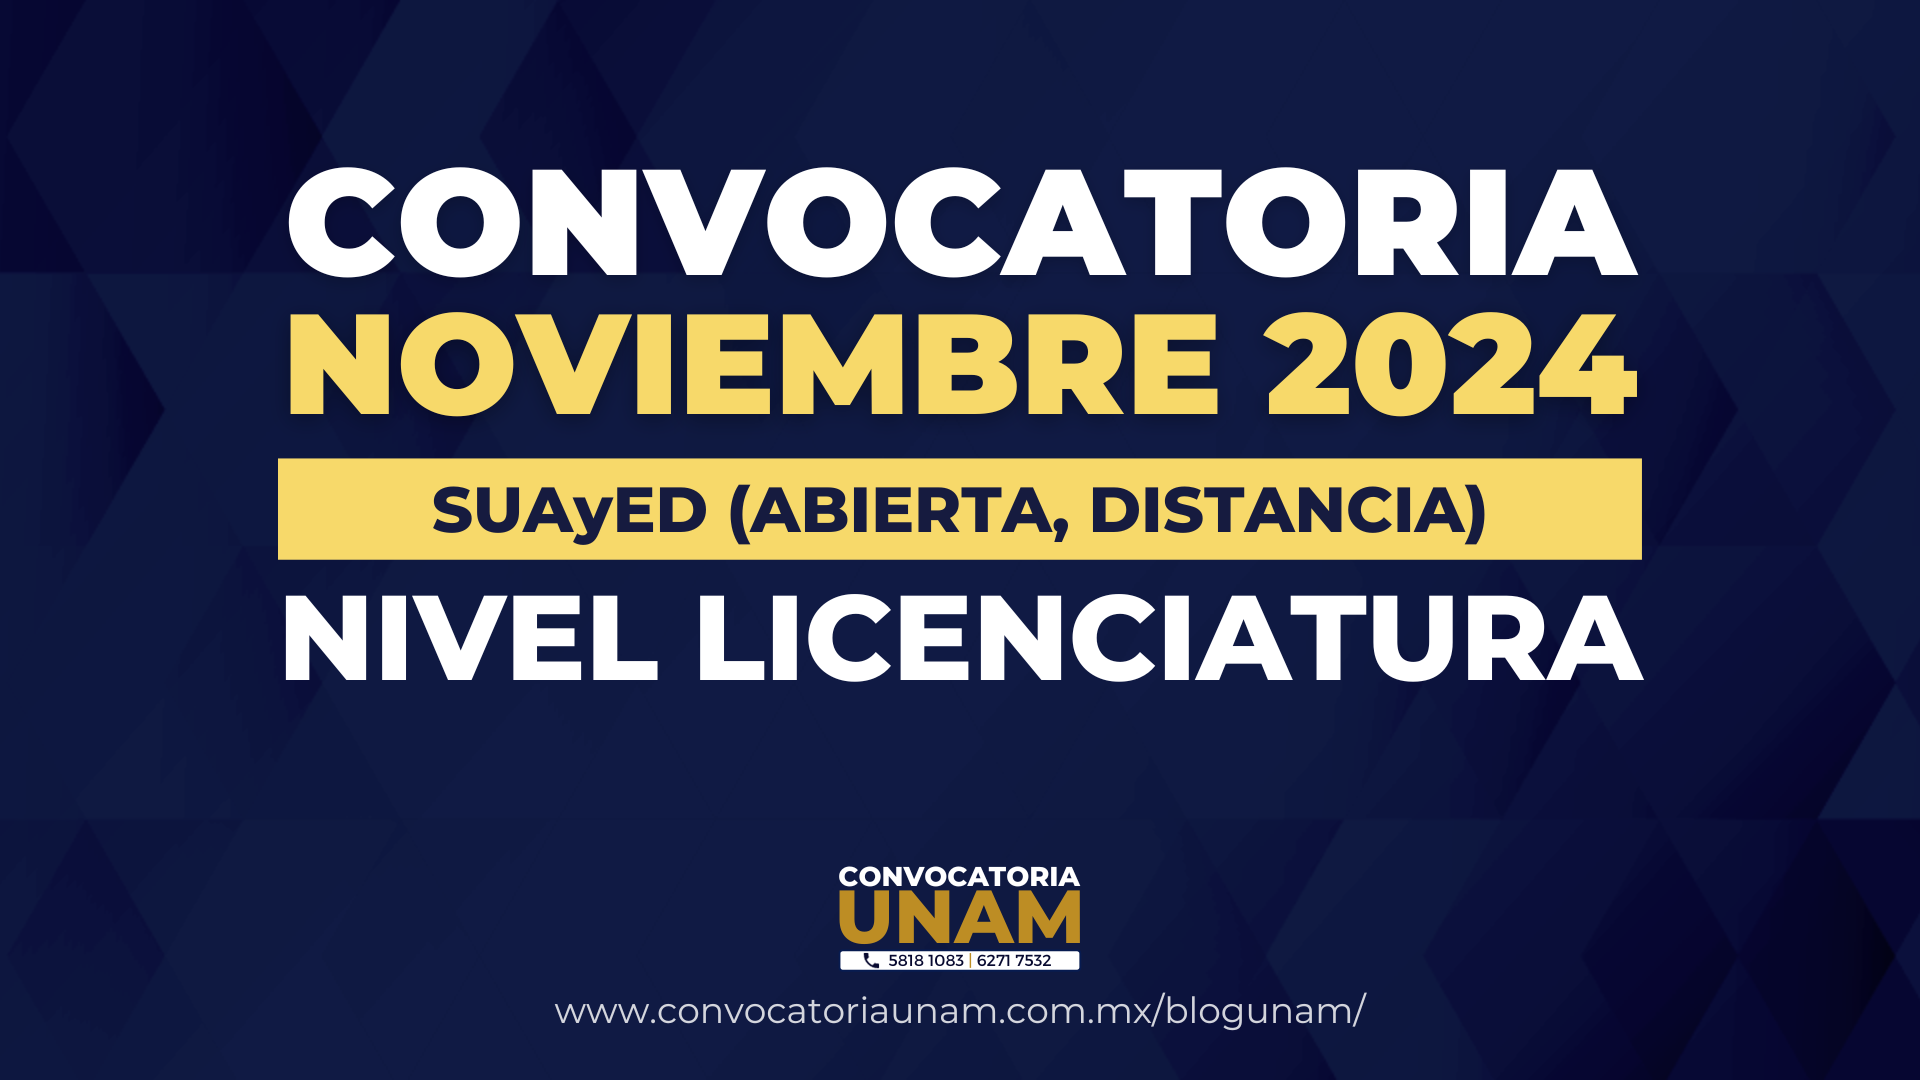 Convocatoria UNAM Noviembre 2024